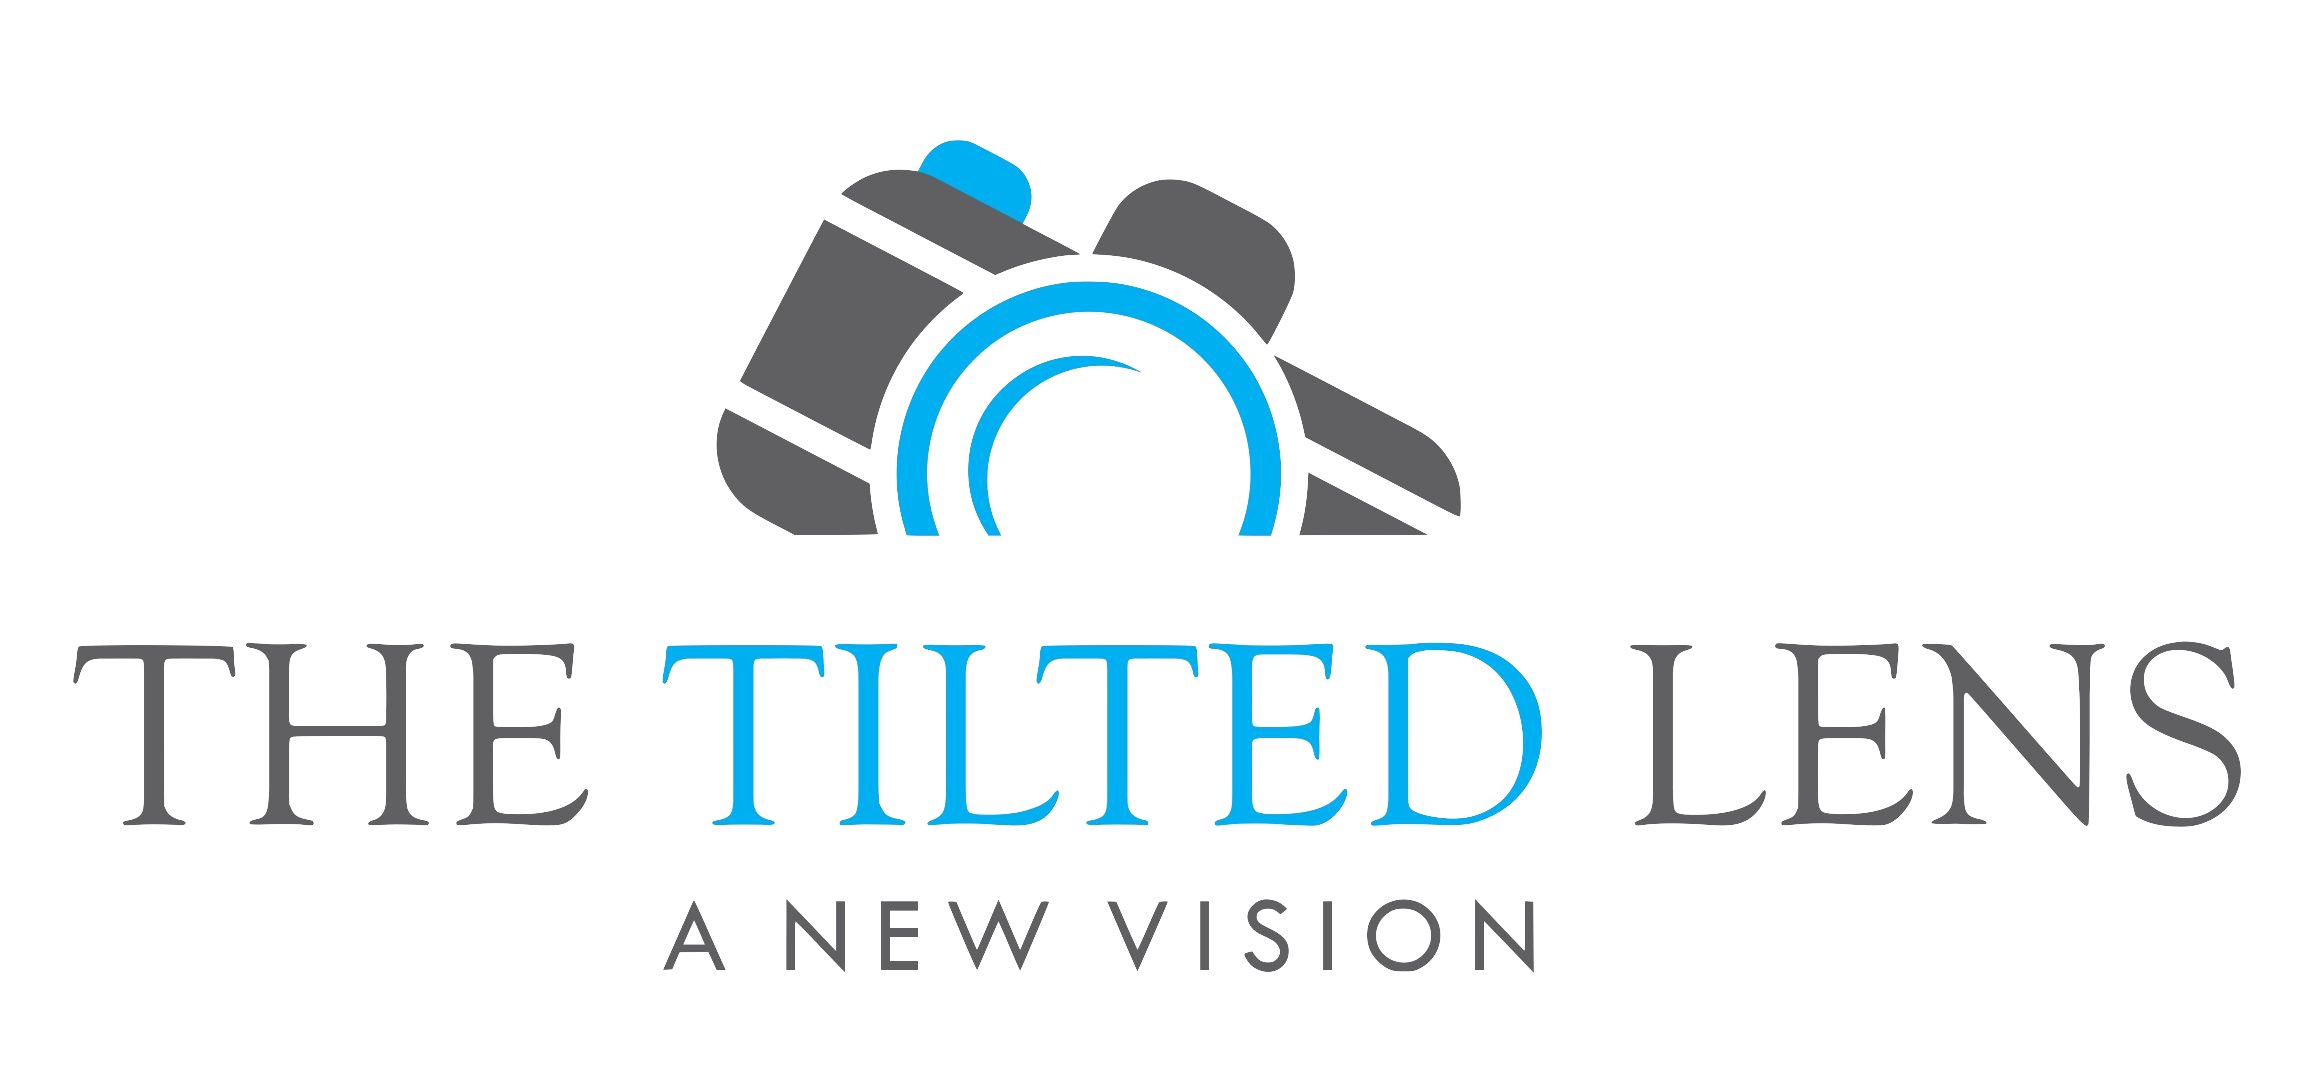 The Tilted Lens